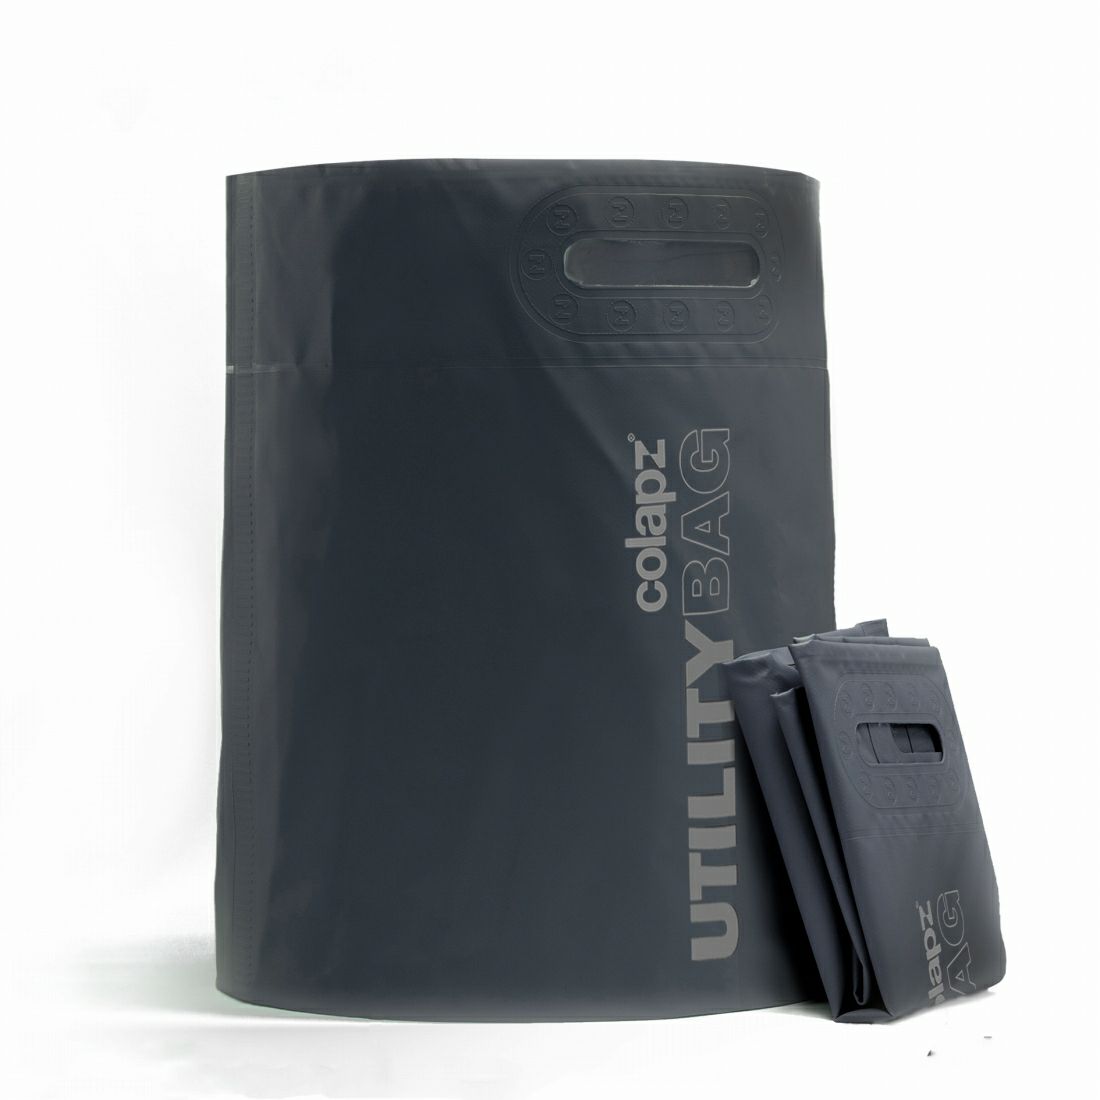 COLAPZ コラプズ 12v Portable Rechargeable Travel Shower (3in1) ポータブルシャワー  アウトドア・キャンプ| バッグ・アウトドア・キャンプ用品のUNBY ONLINE STORE